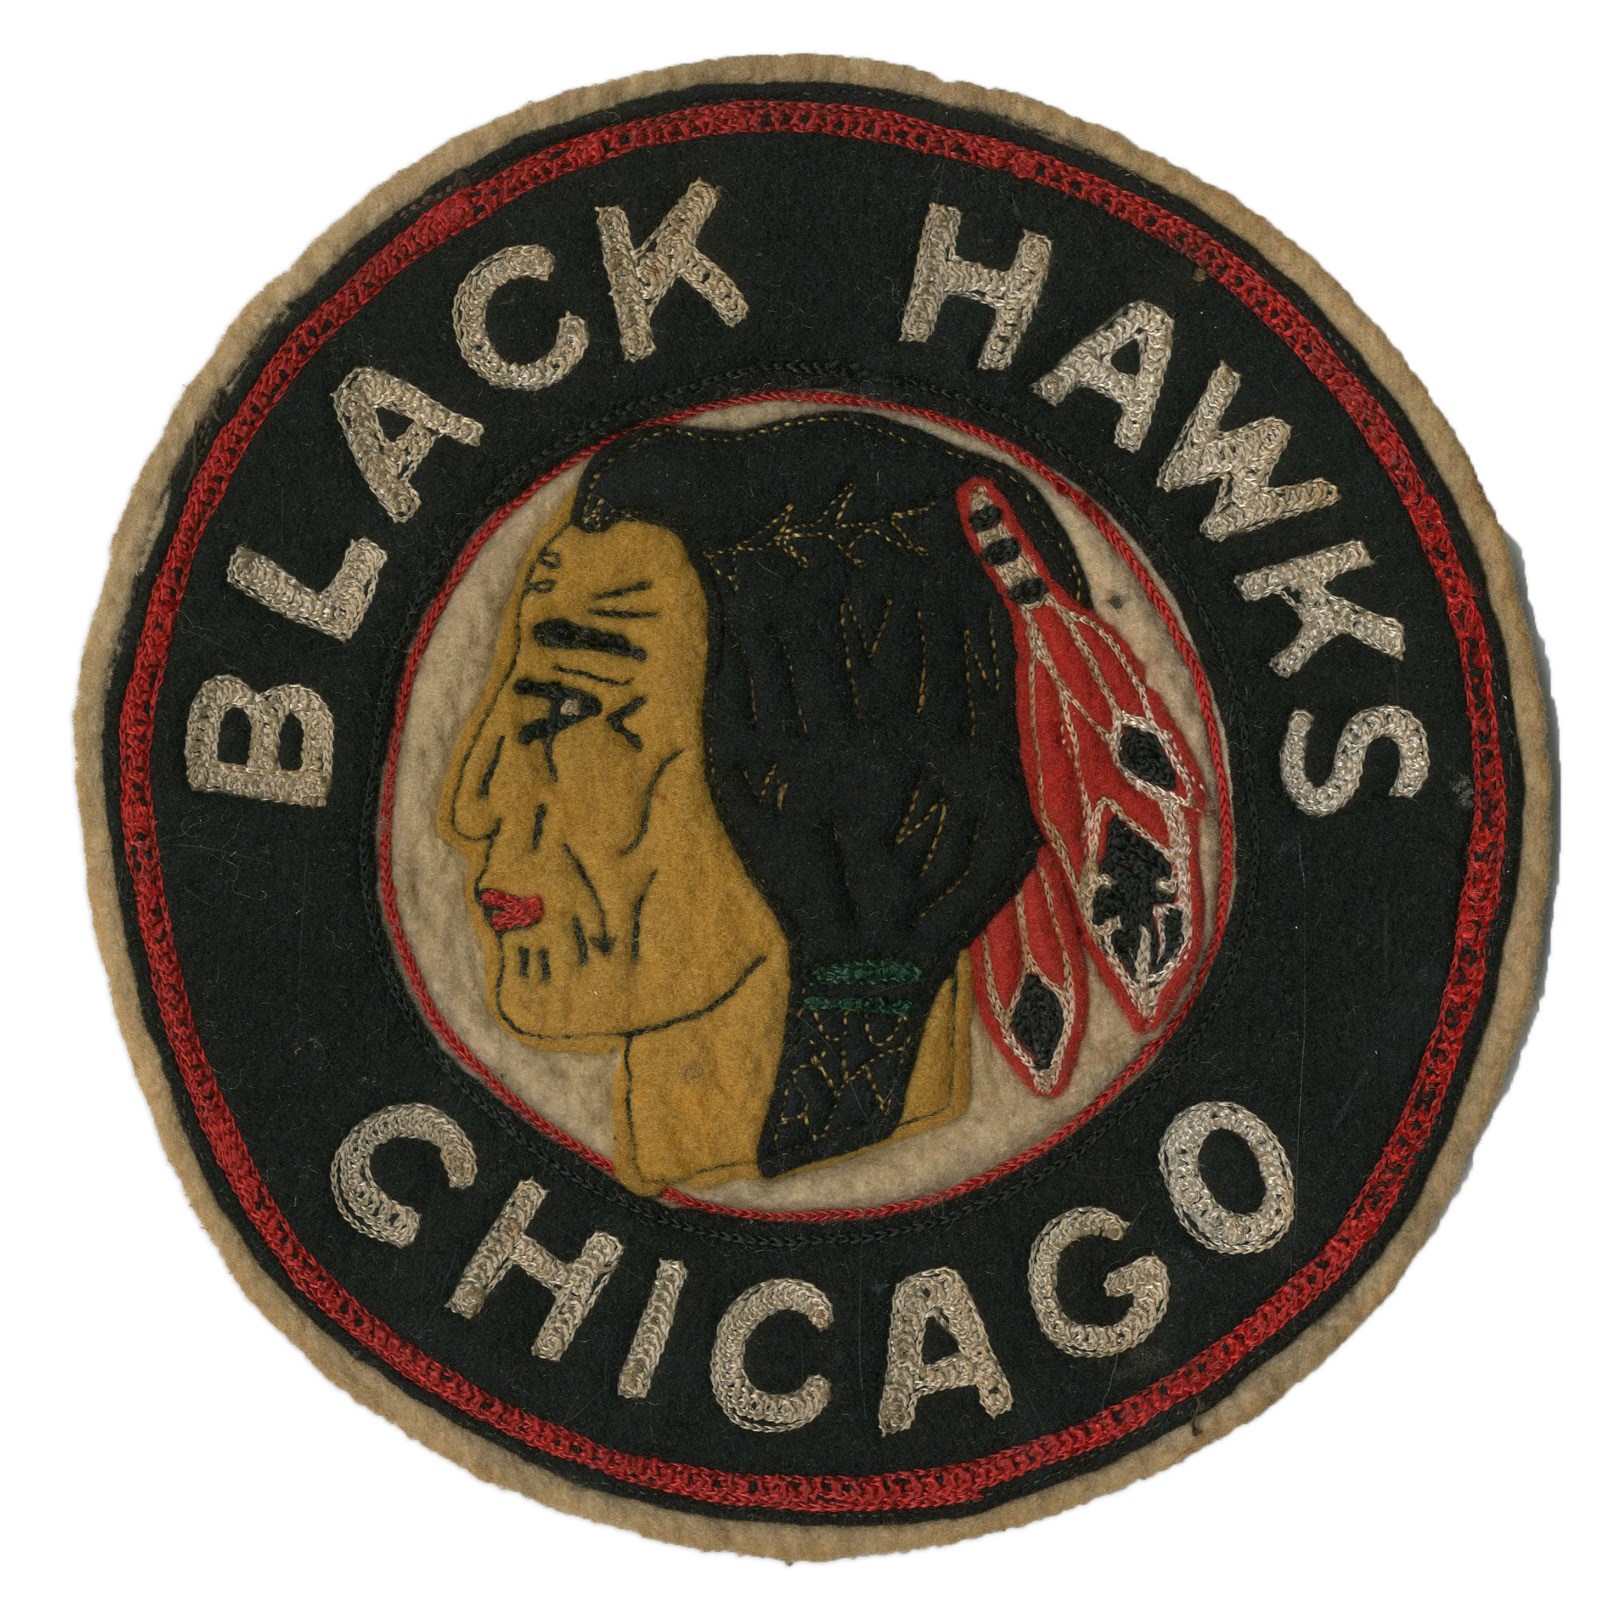 - 1930s Chicago Blackhawks Jersey Crest